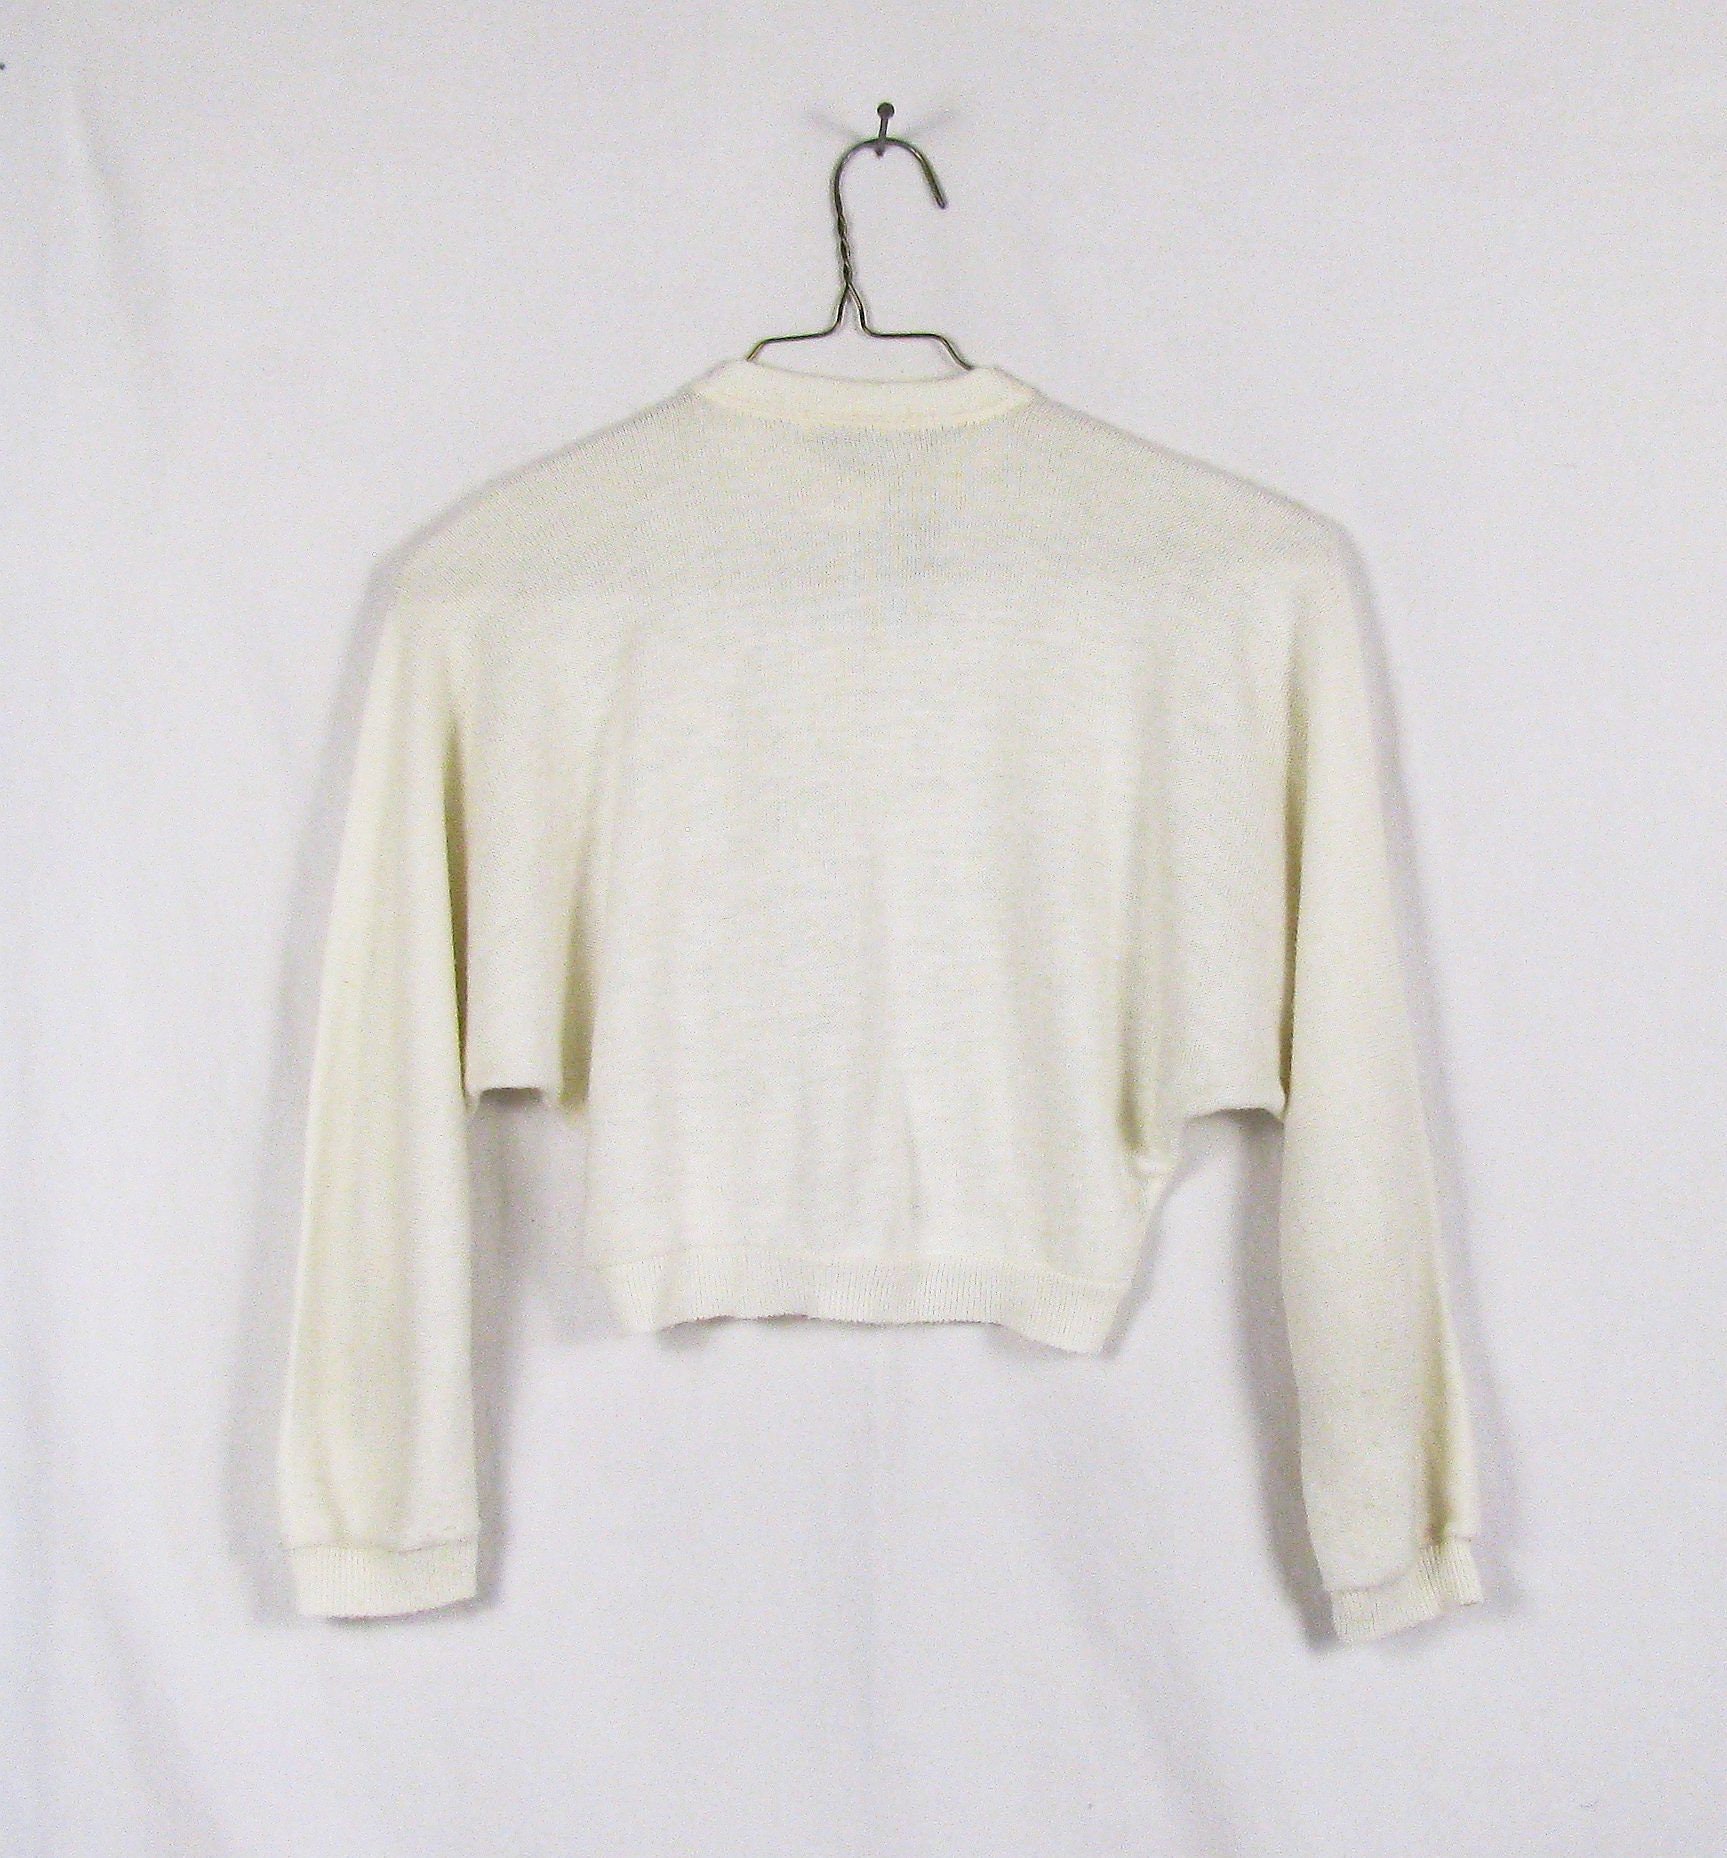 Sweet Vintage 1950s Cream Colored Pinup Bolero Sweater - Etsy